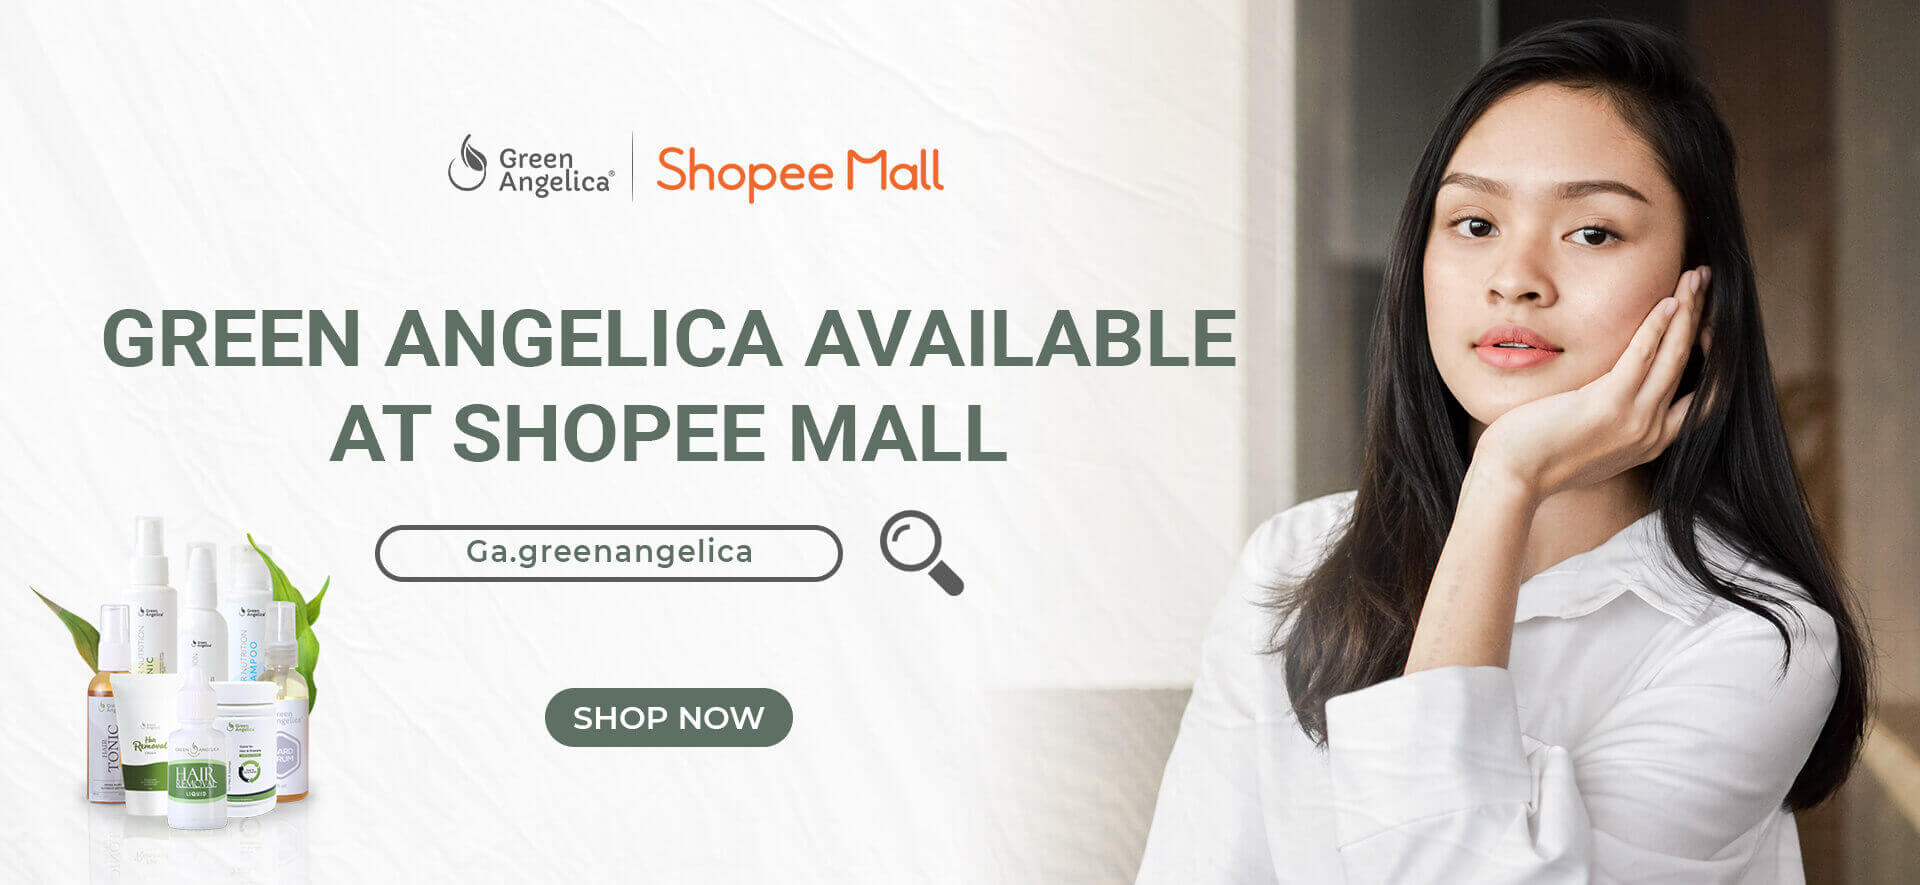 Shopee Mall Green Angelica